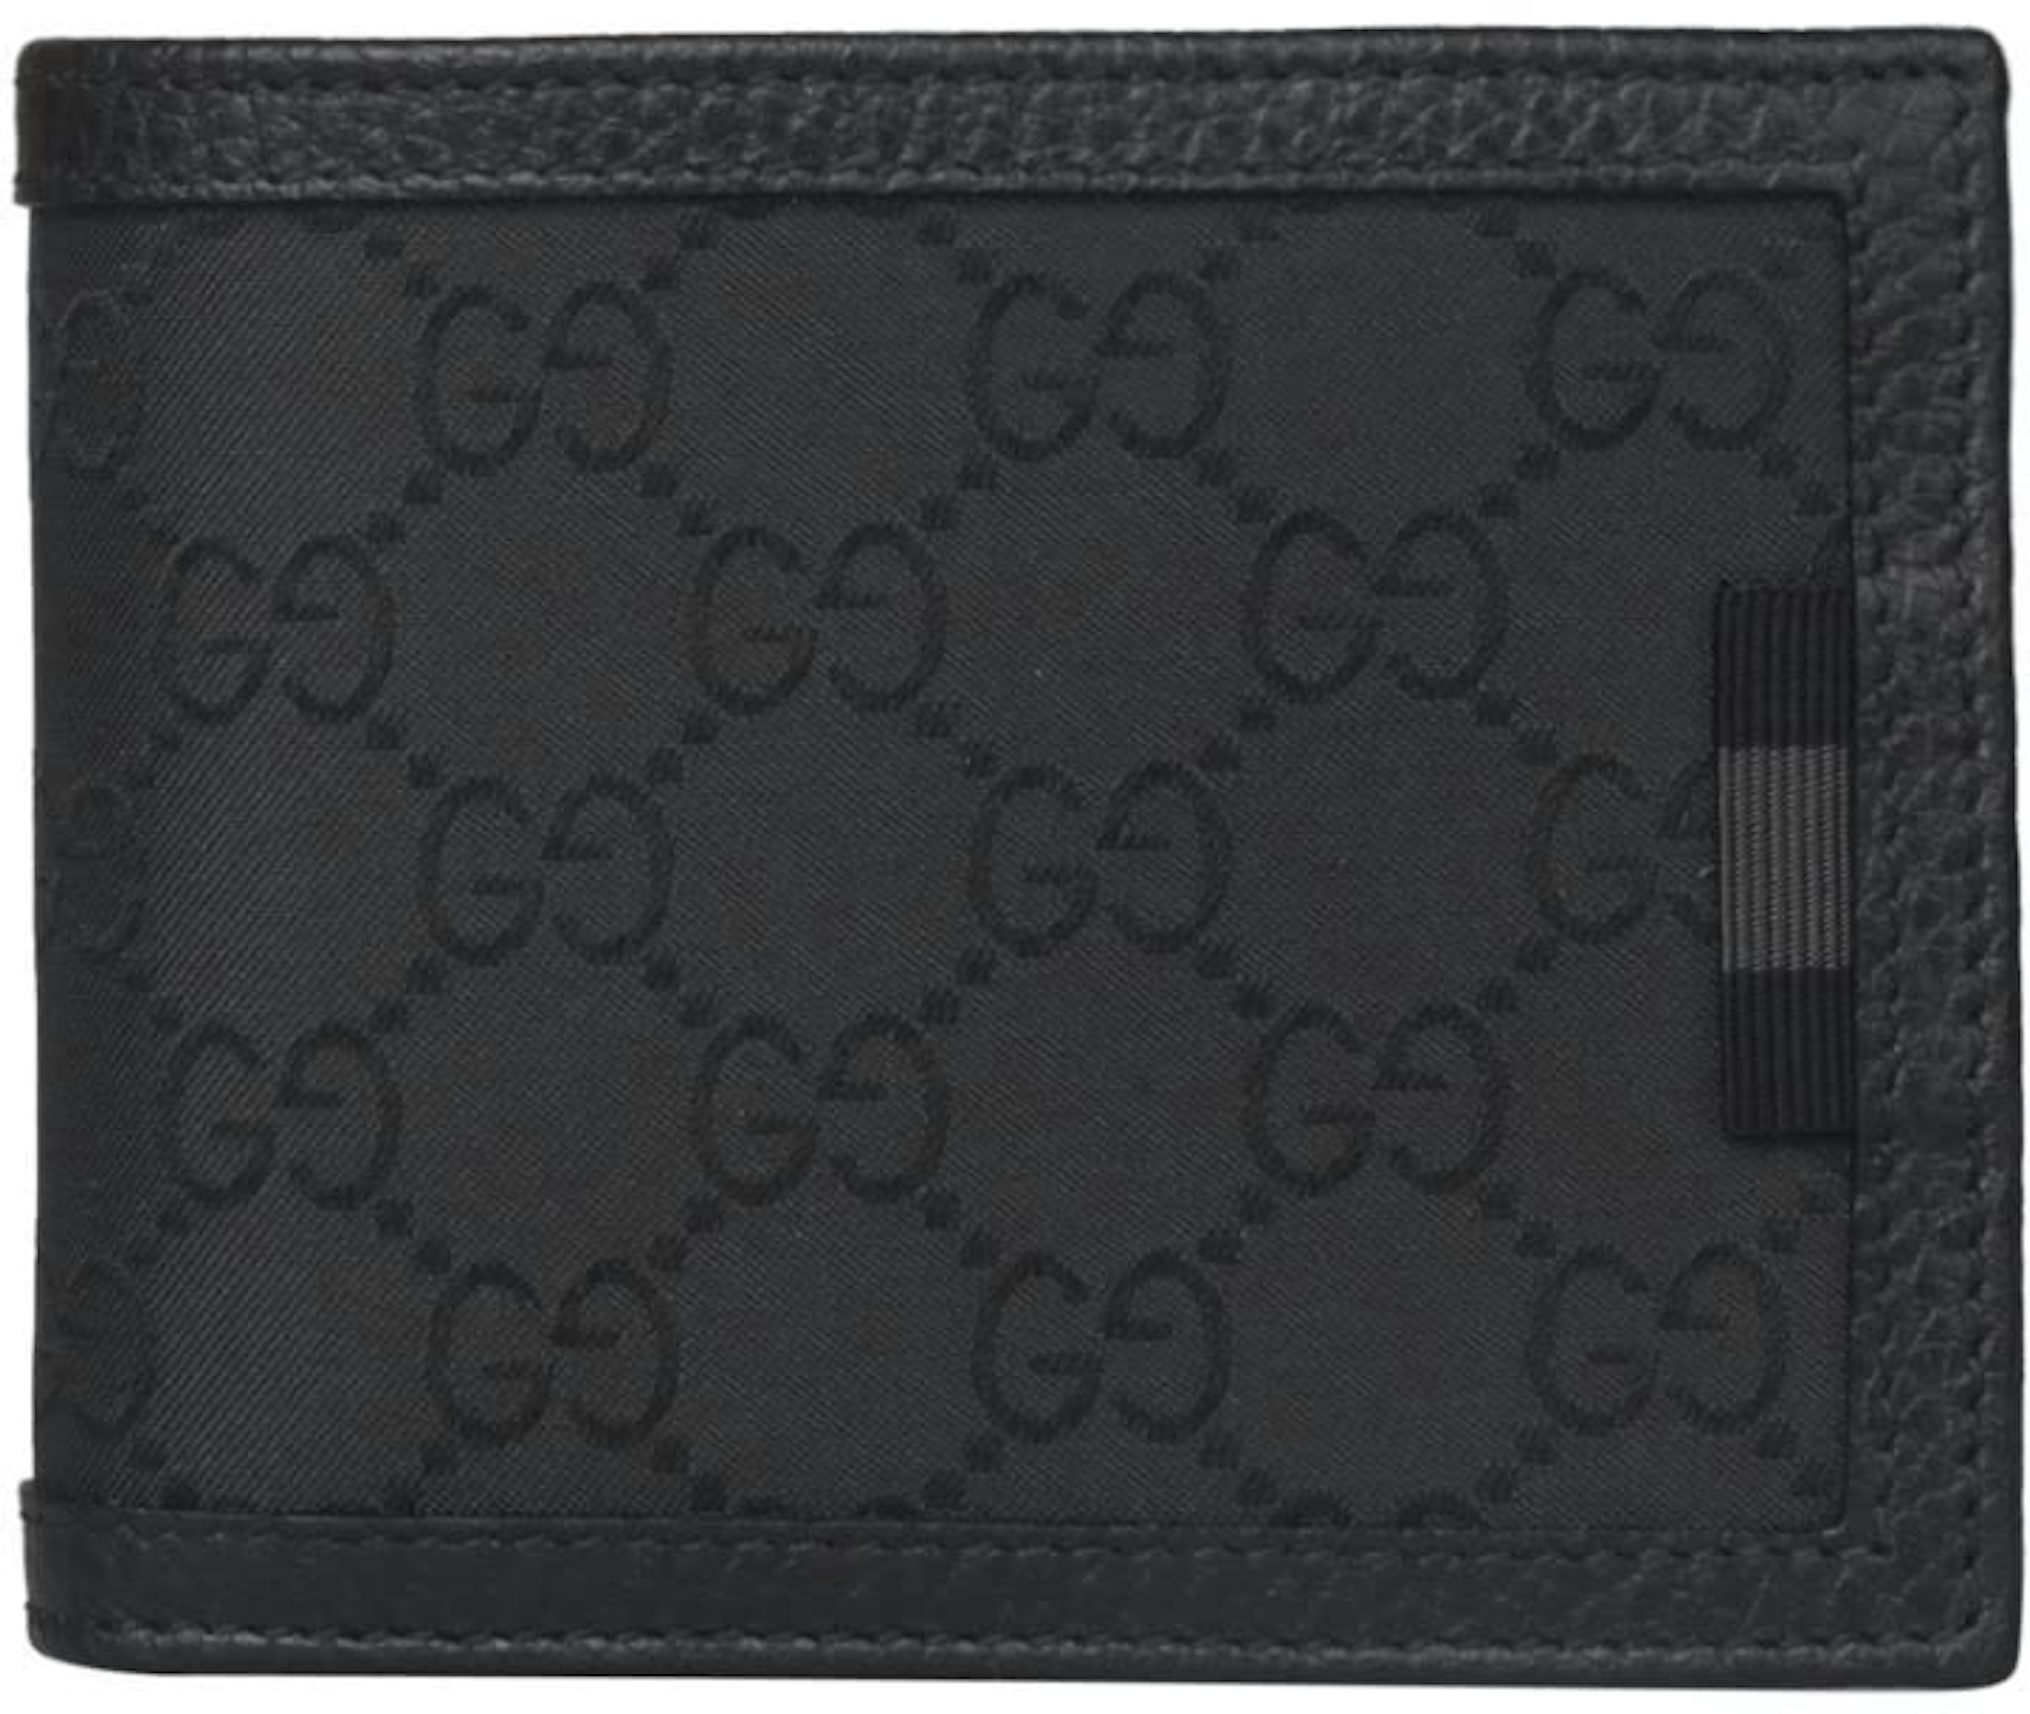 GG Supreme Canvas Wallet in Black - Gucci